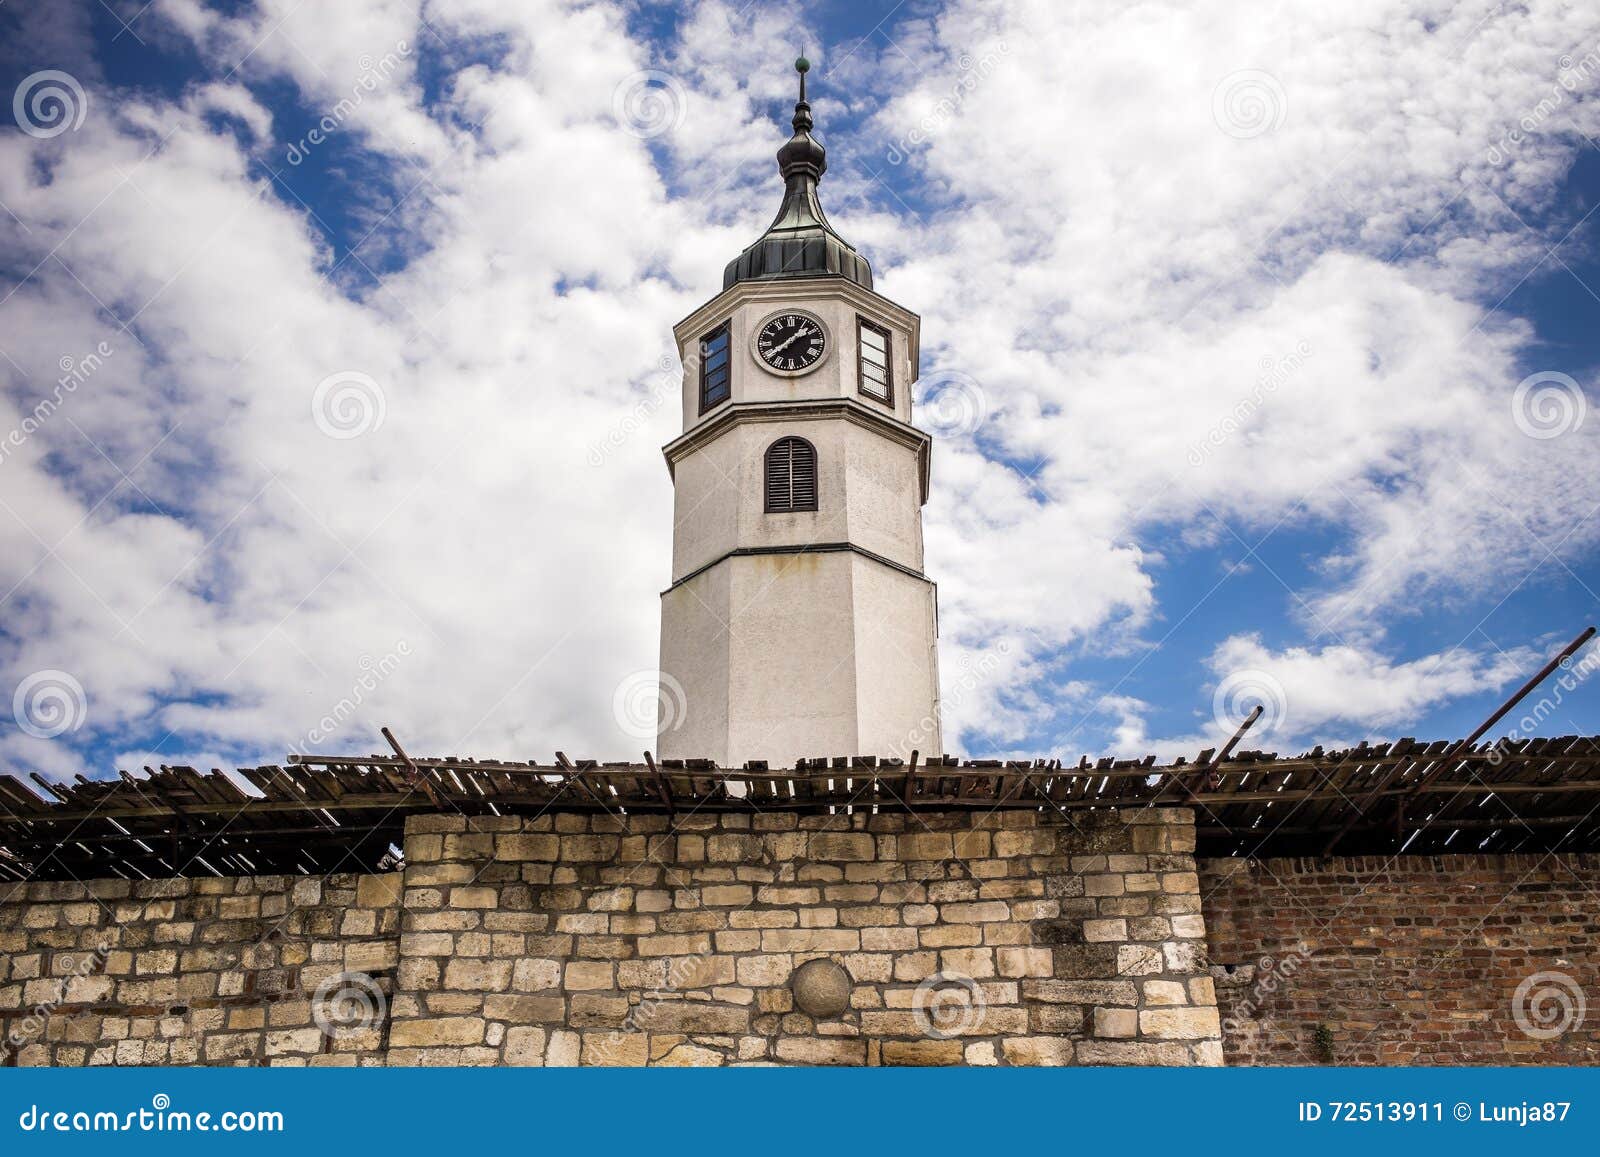 sahat clock tower of belgrade fortress kalemegdan